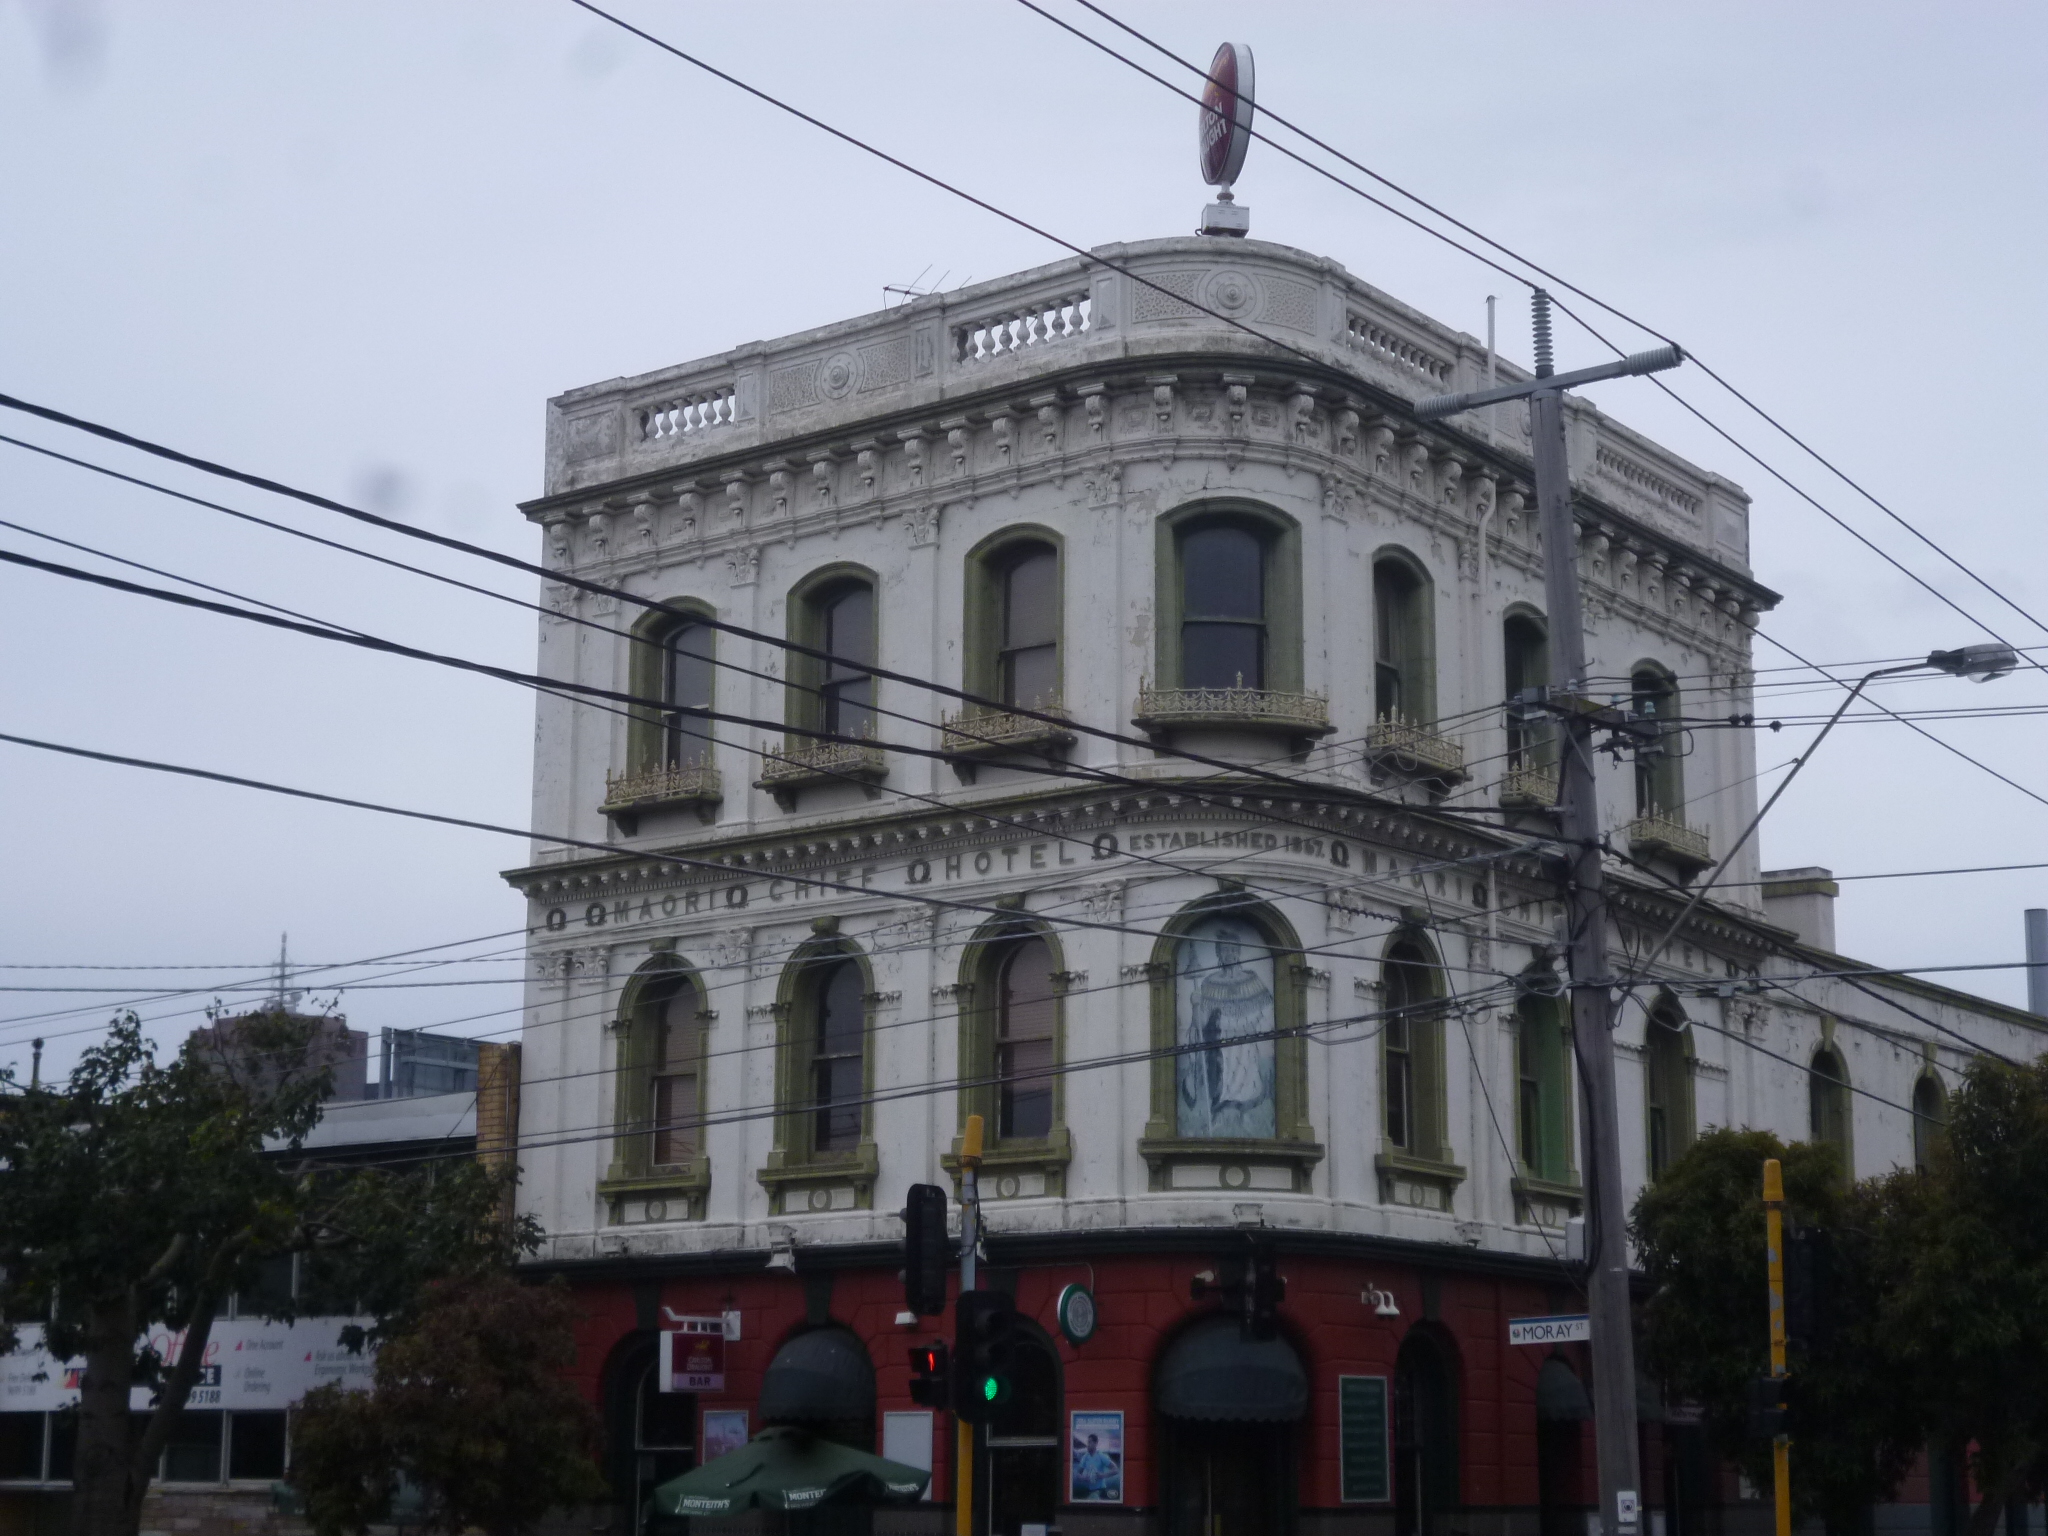 Maori Chief Hotel - Casino Accommodation